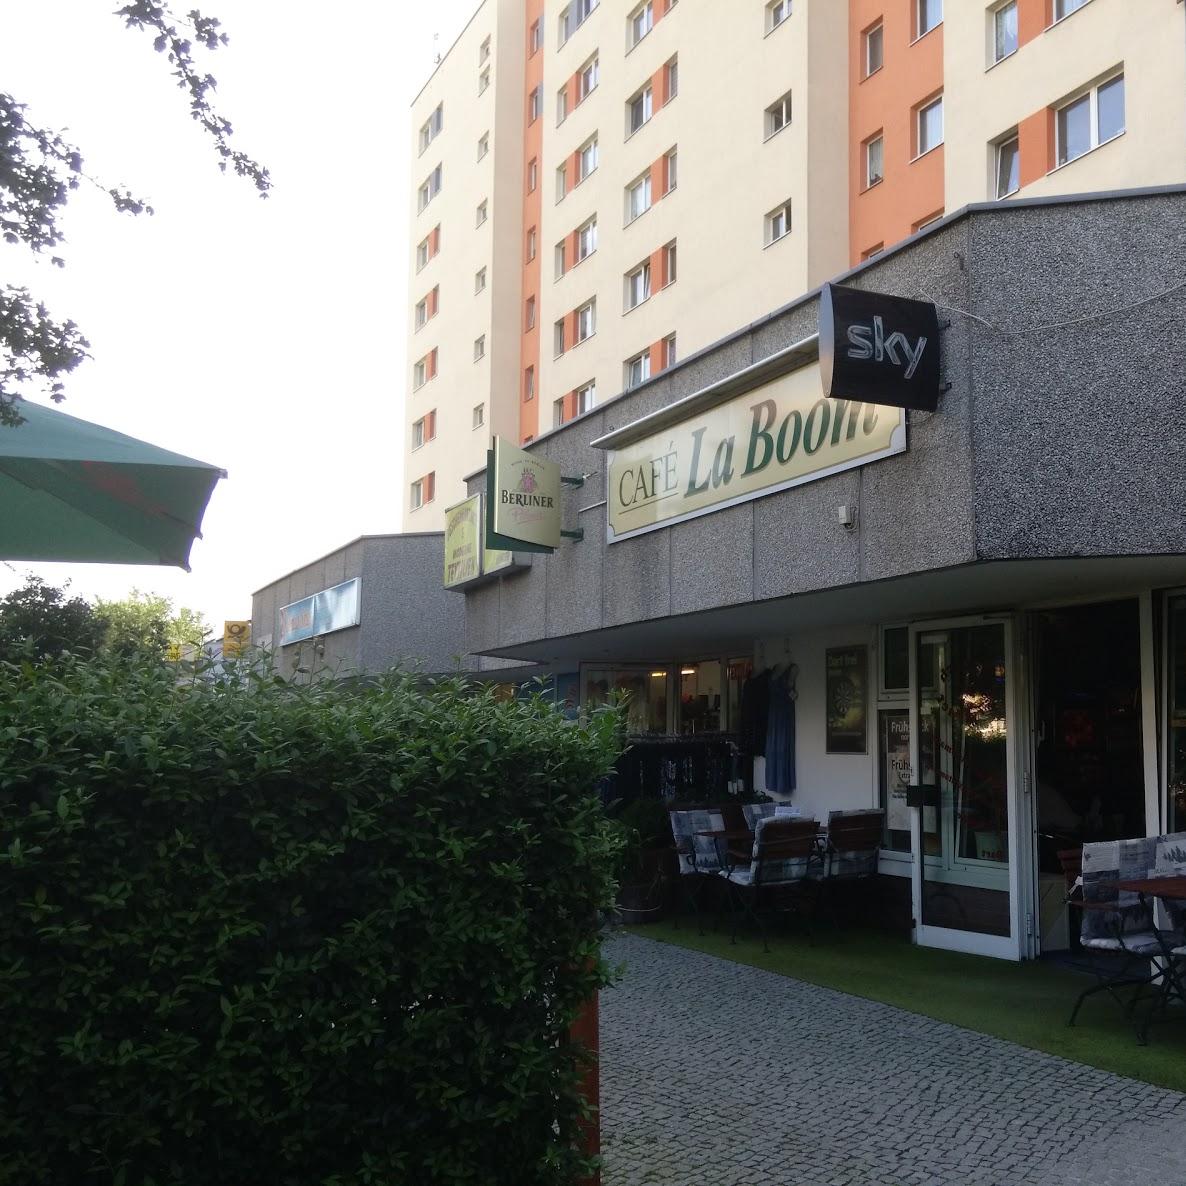 Restaurant "Café La Boom (Raucherlokal)" in Berlin